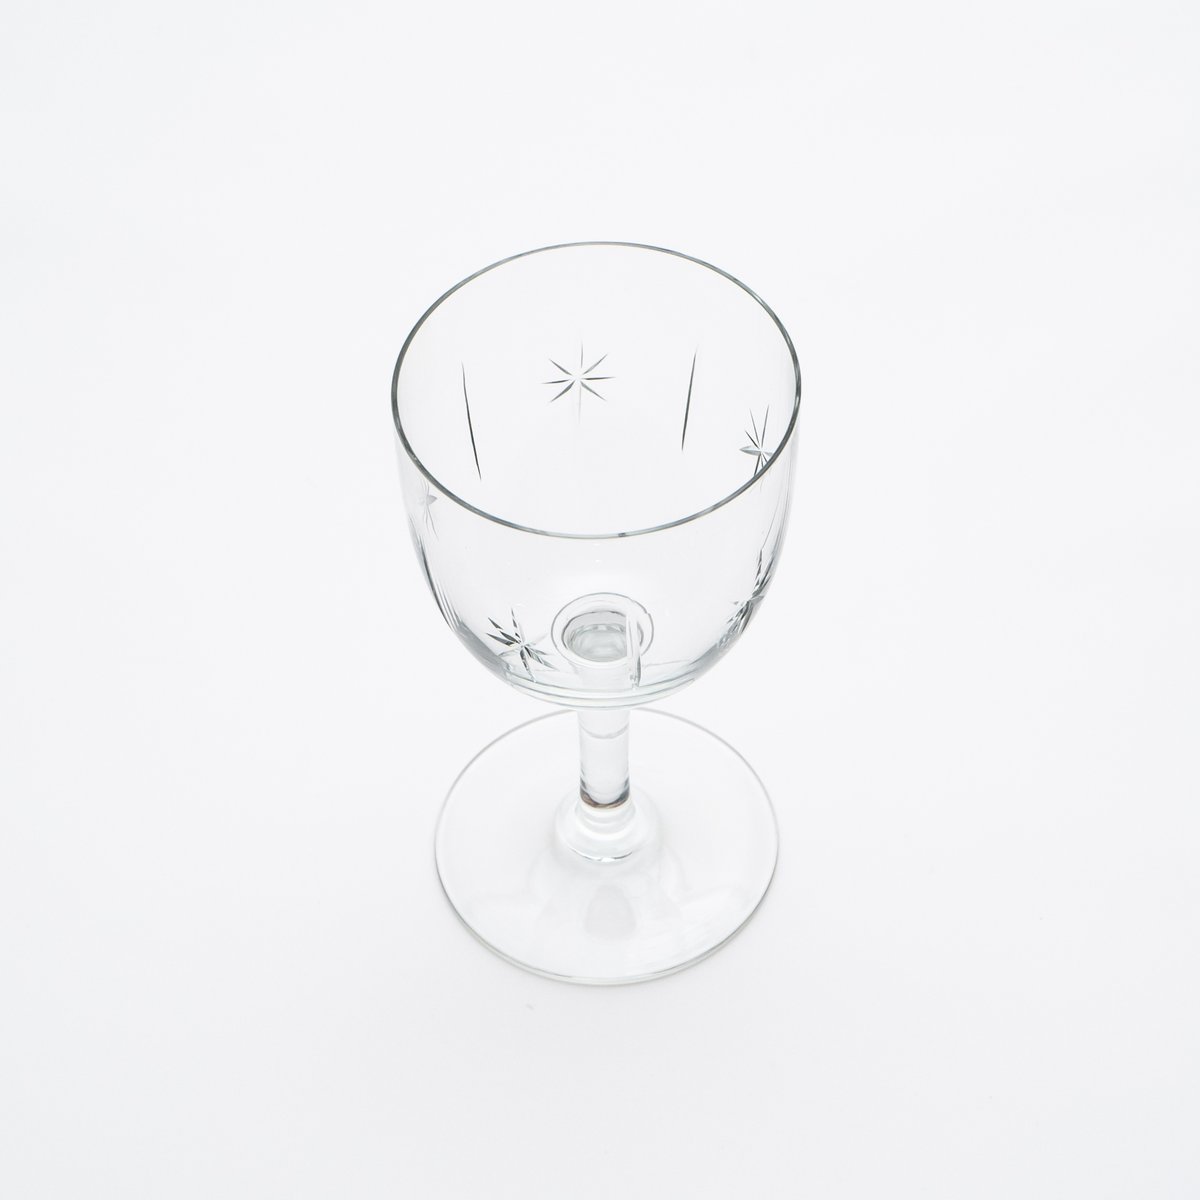 Iittala｜Venus｜wine glass | lumikka online shop